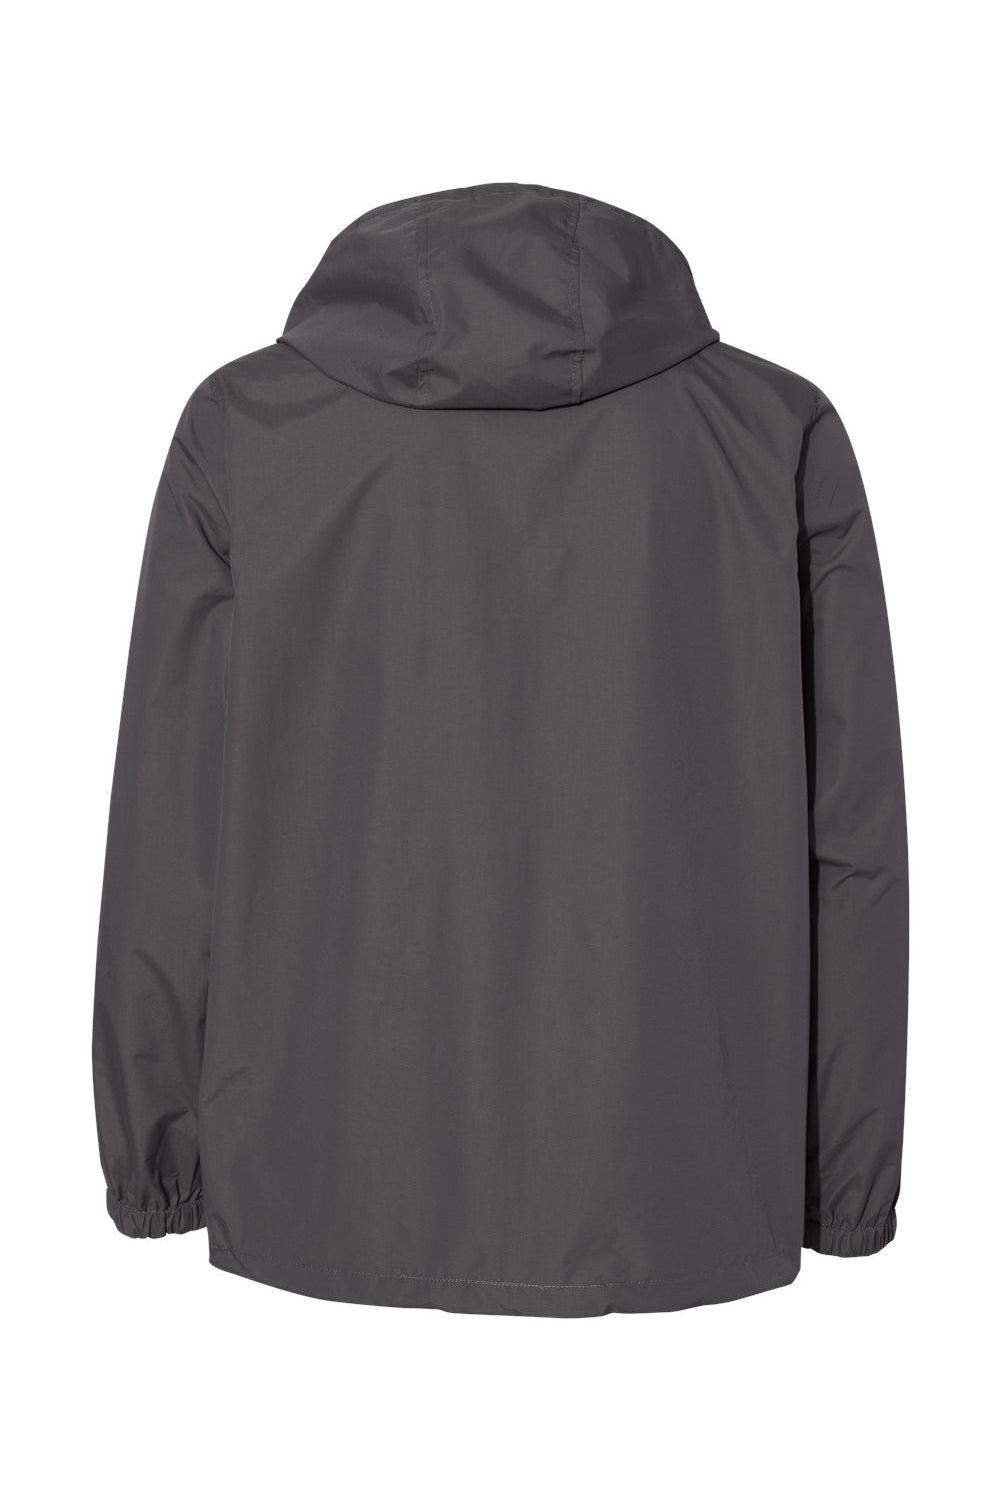 Independent Trading Co. EXP94NAW Mens Nylon Hooded Anorak Jacket Graphite Grey Flat Back